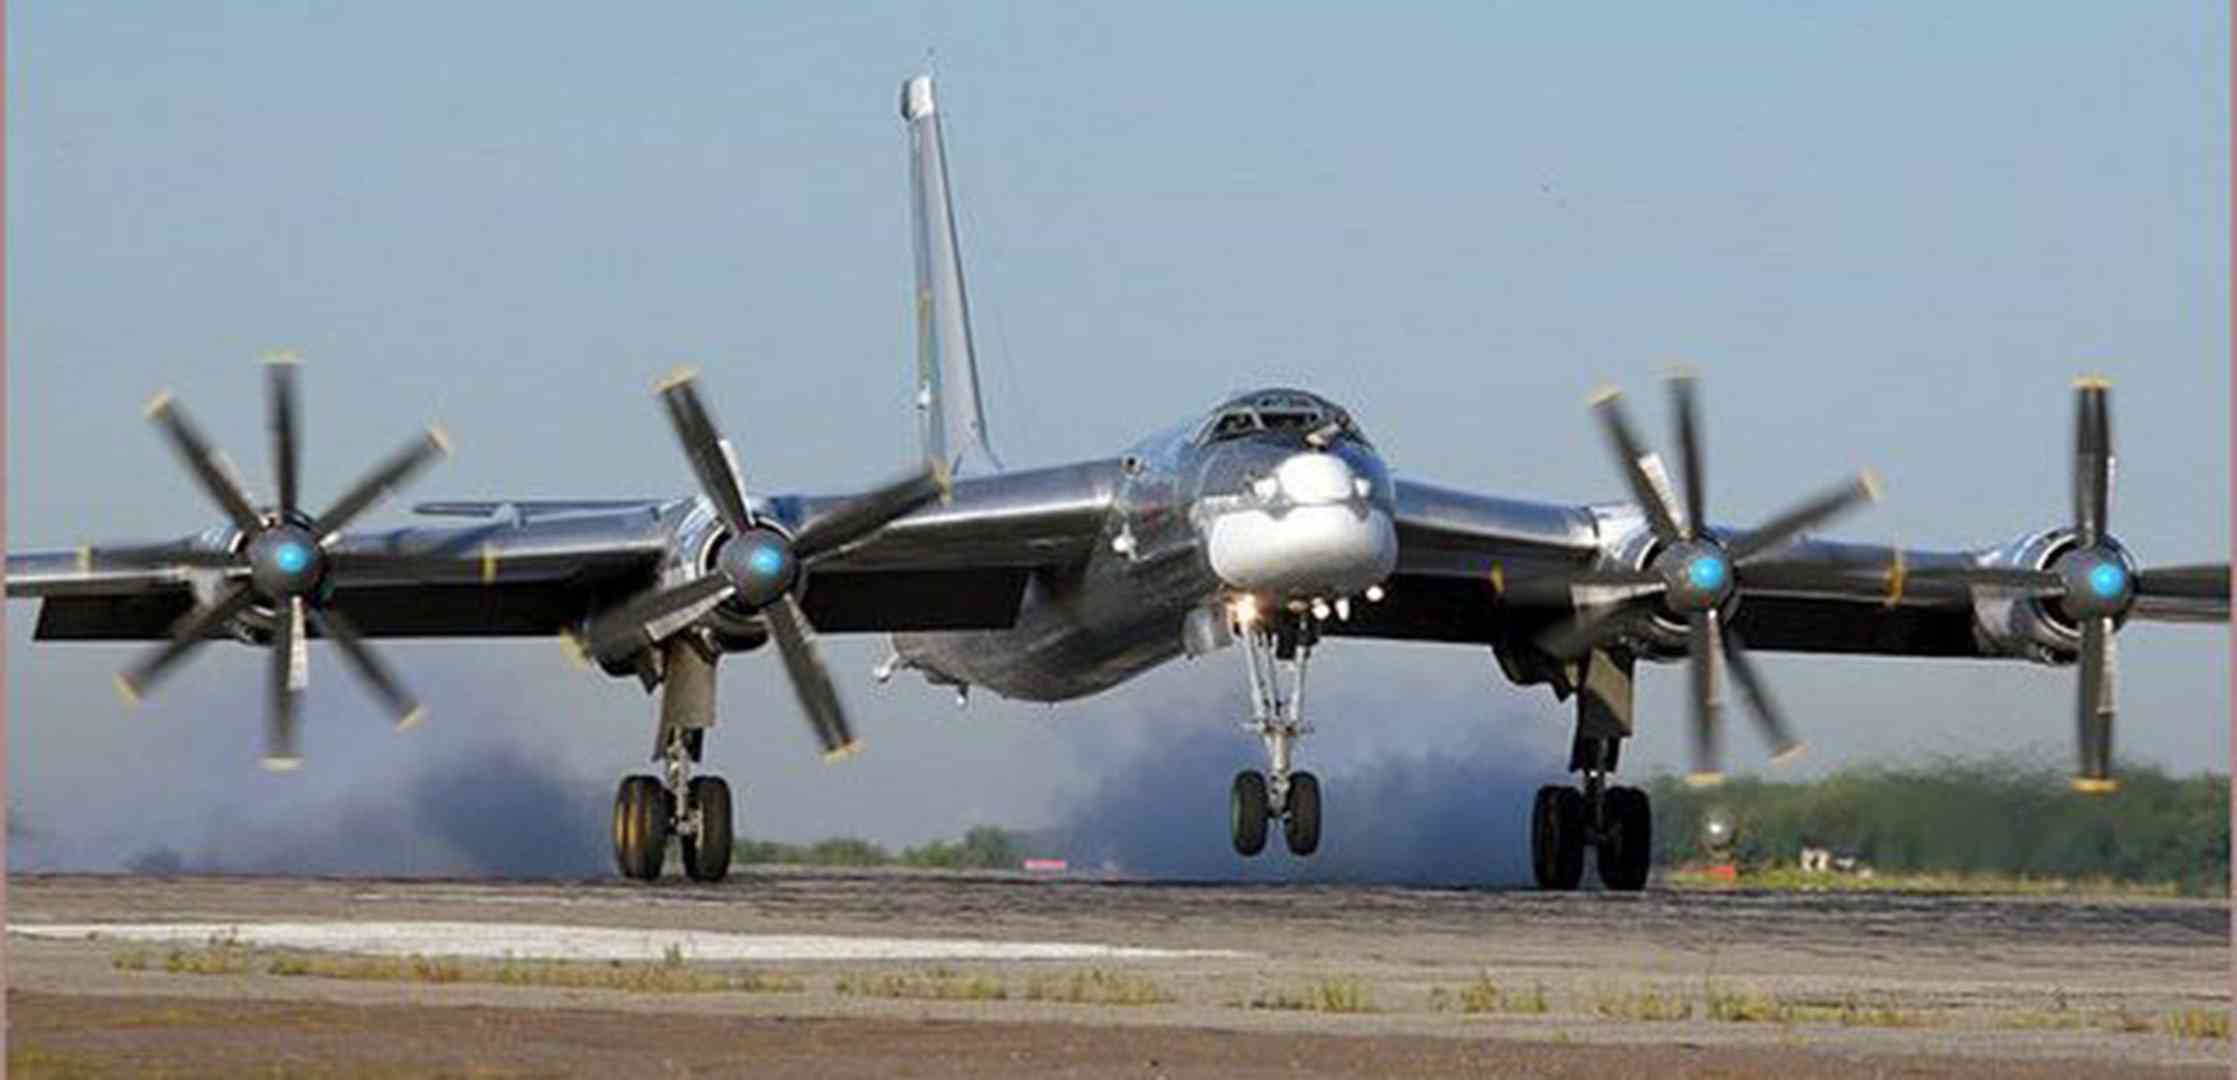 Ту 95 дальний бомбардировщик. Ту-95 МС бомбардировщик. Ту-95мс. Ту 95 МС Дальний бомбардировщик. Стратегический бомбардировщик ту-95мс.